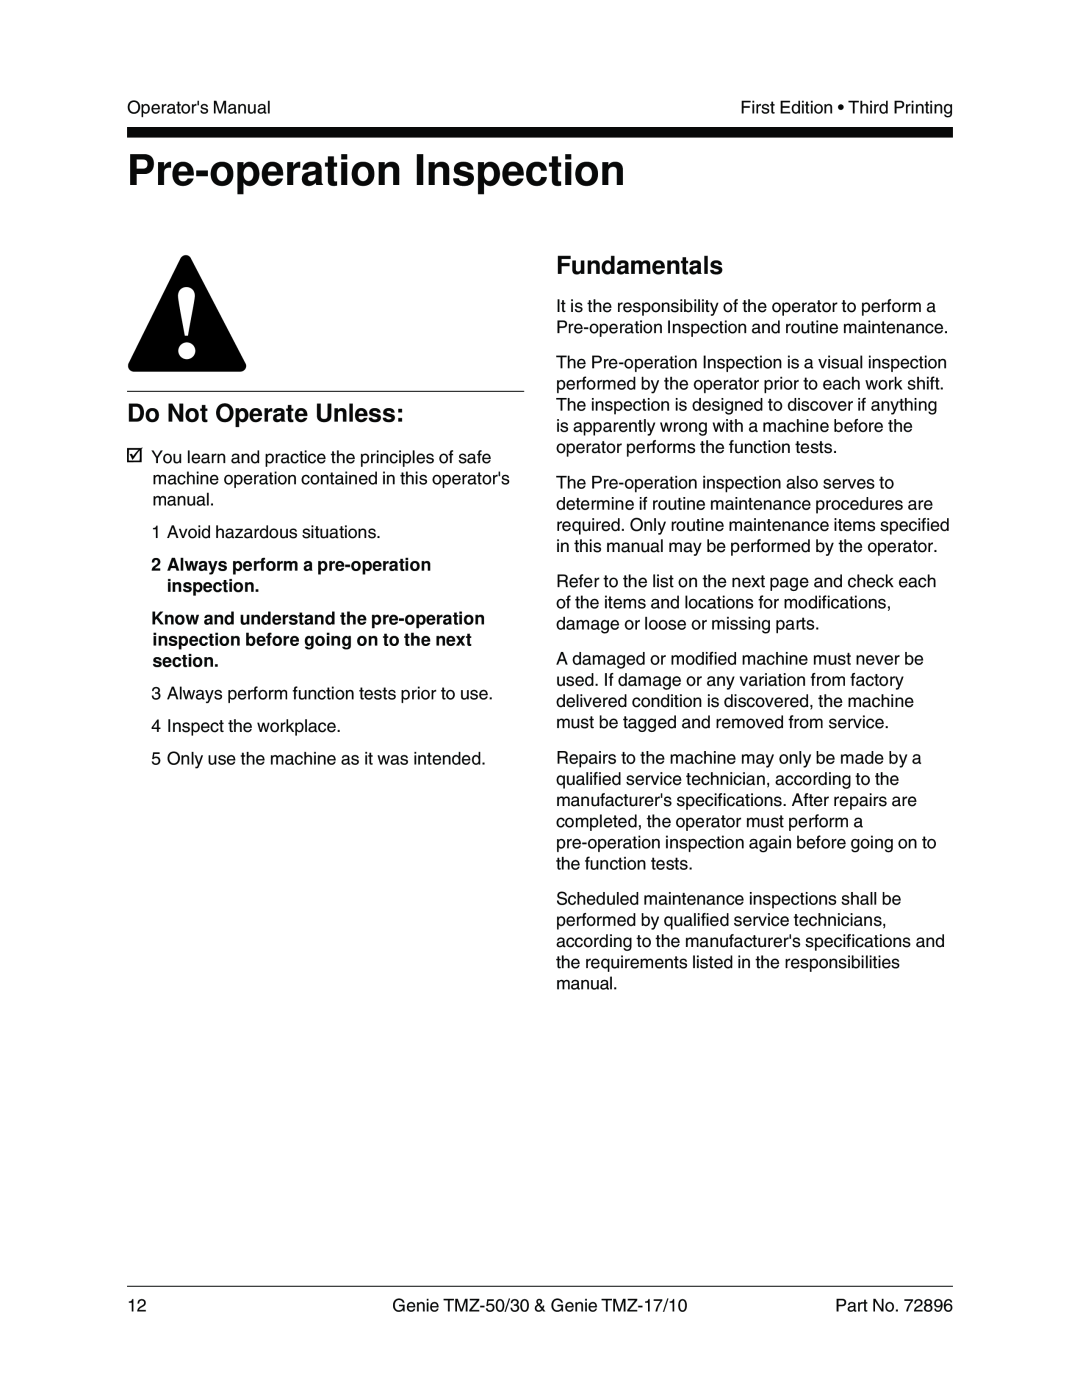 Genie TMZ-50, TMZ-30, TMZ-17, TMZ-10 Pre-operation Inspection, Fundamentals, Always perform a pre-operation inspection 